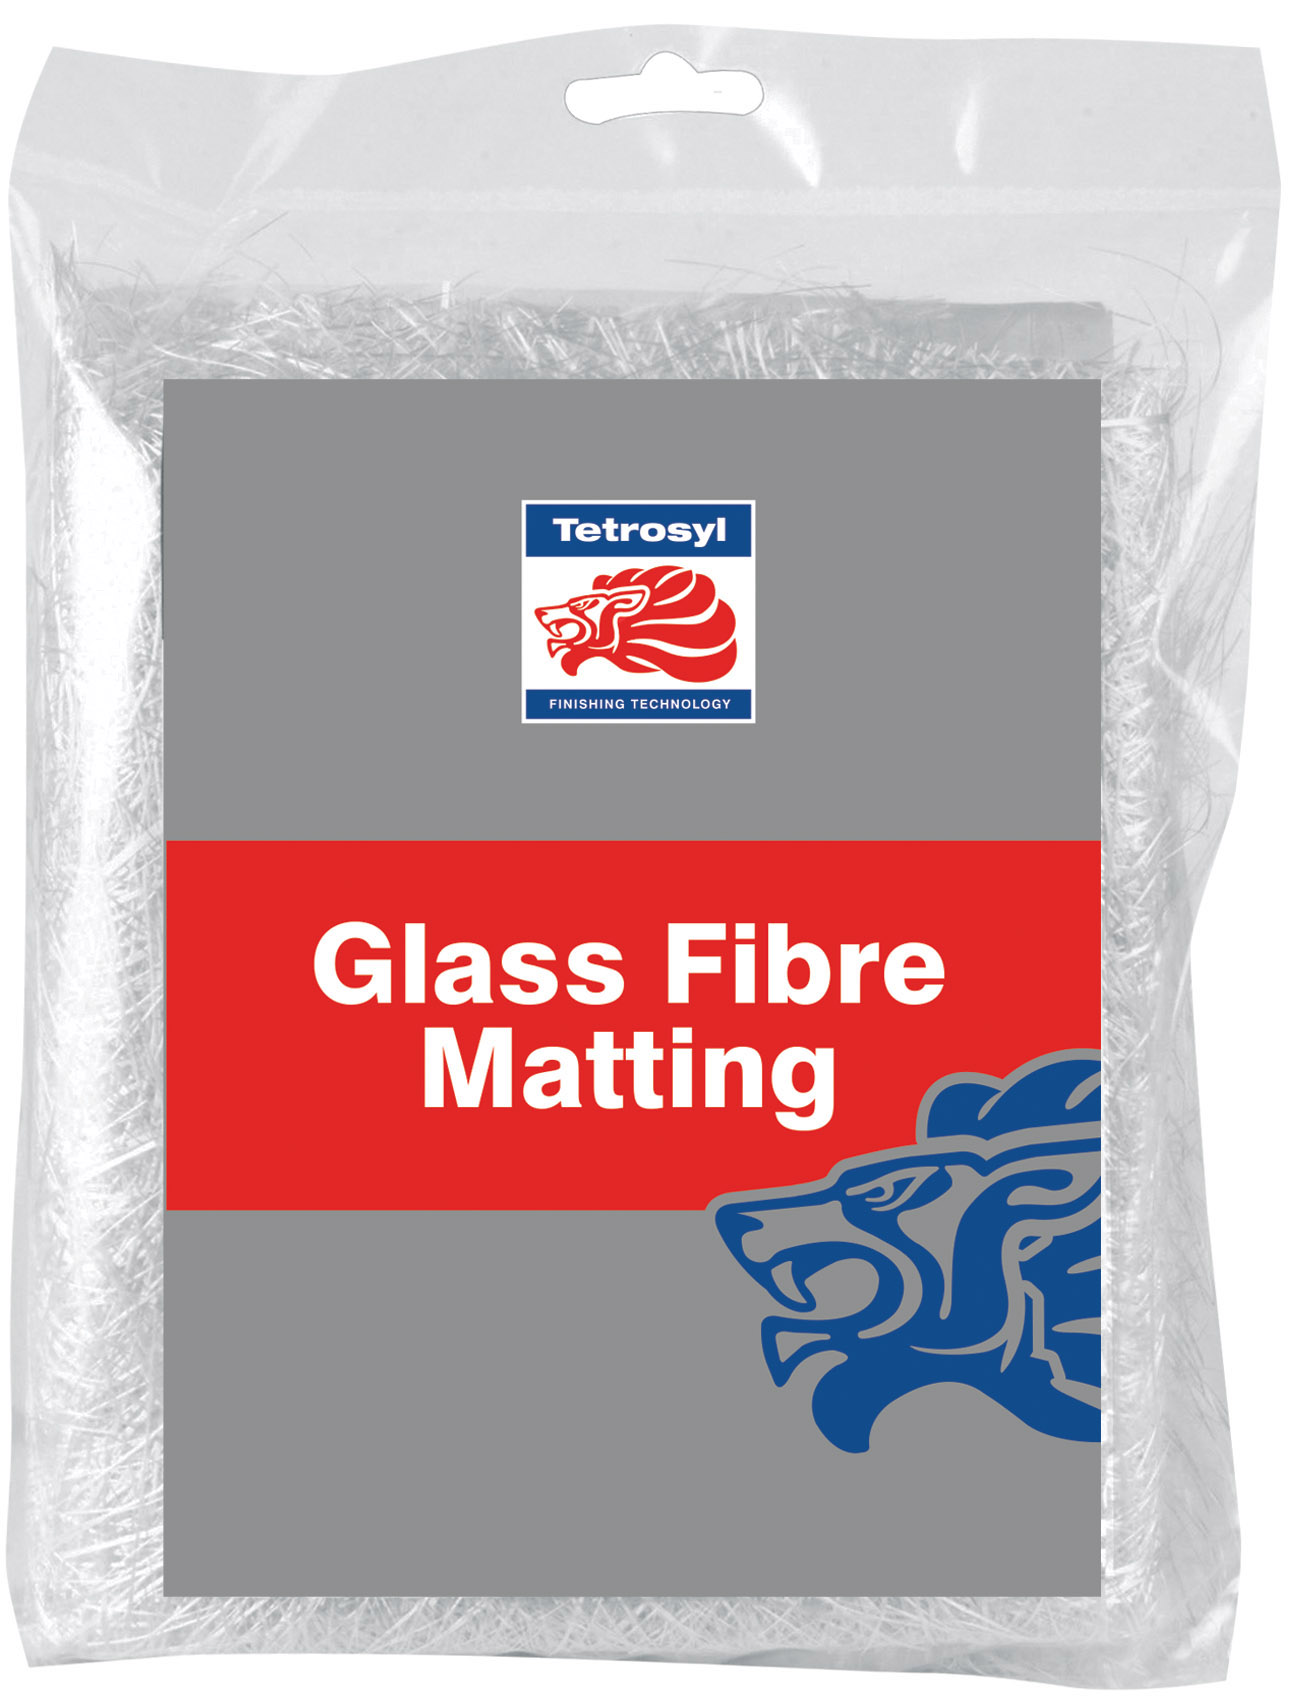 Picture of Tetrosyl Gfm001 Glass Fibre Matting